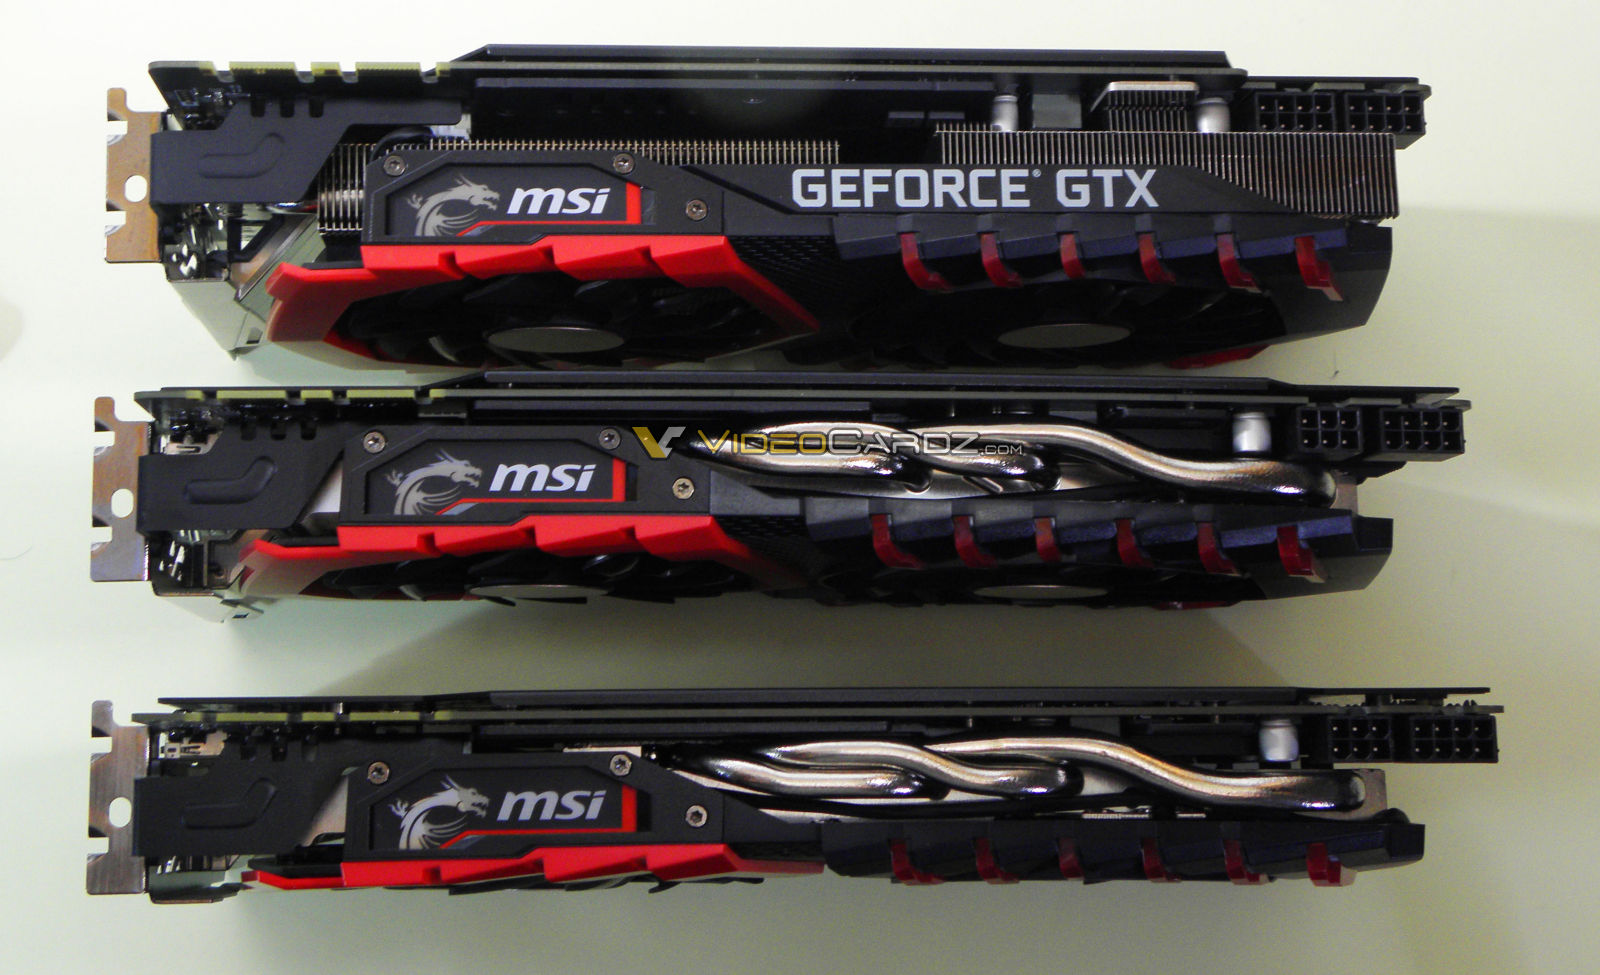 MSI GeForce GTX 1080 GAMING X Plus pictured up close | VideoCardz.com